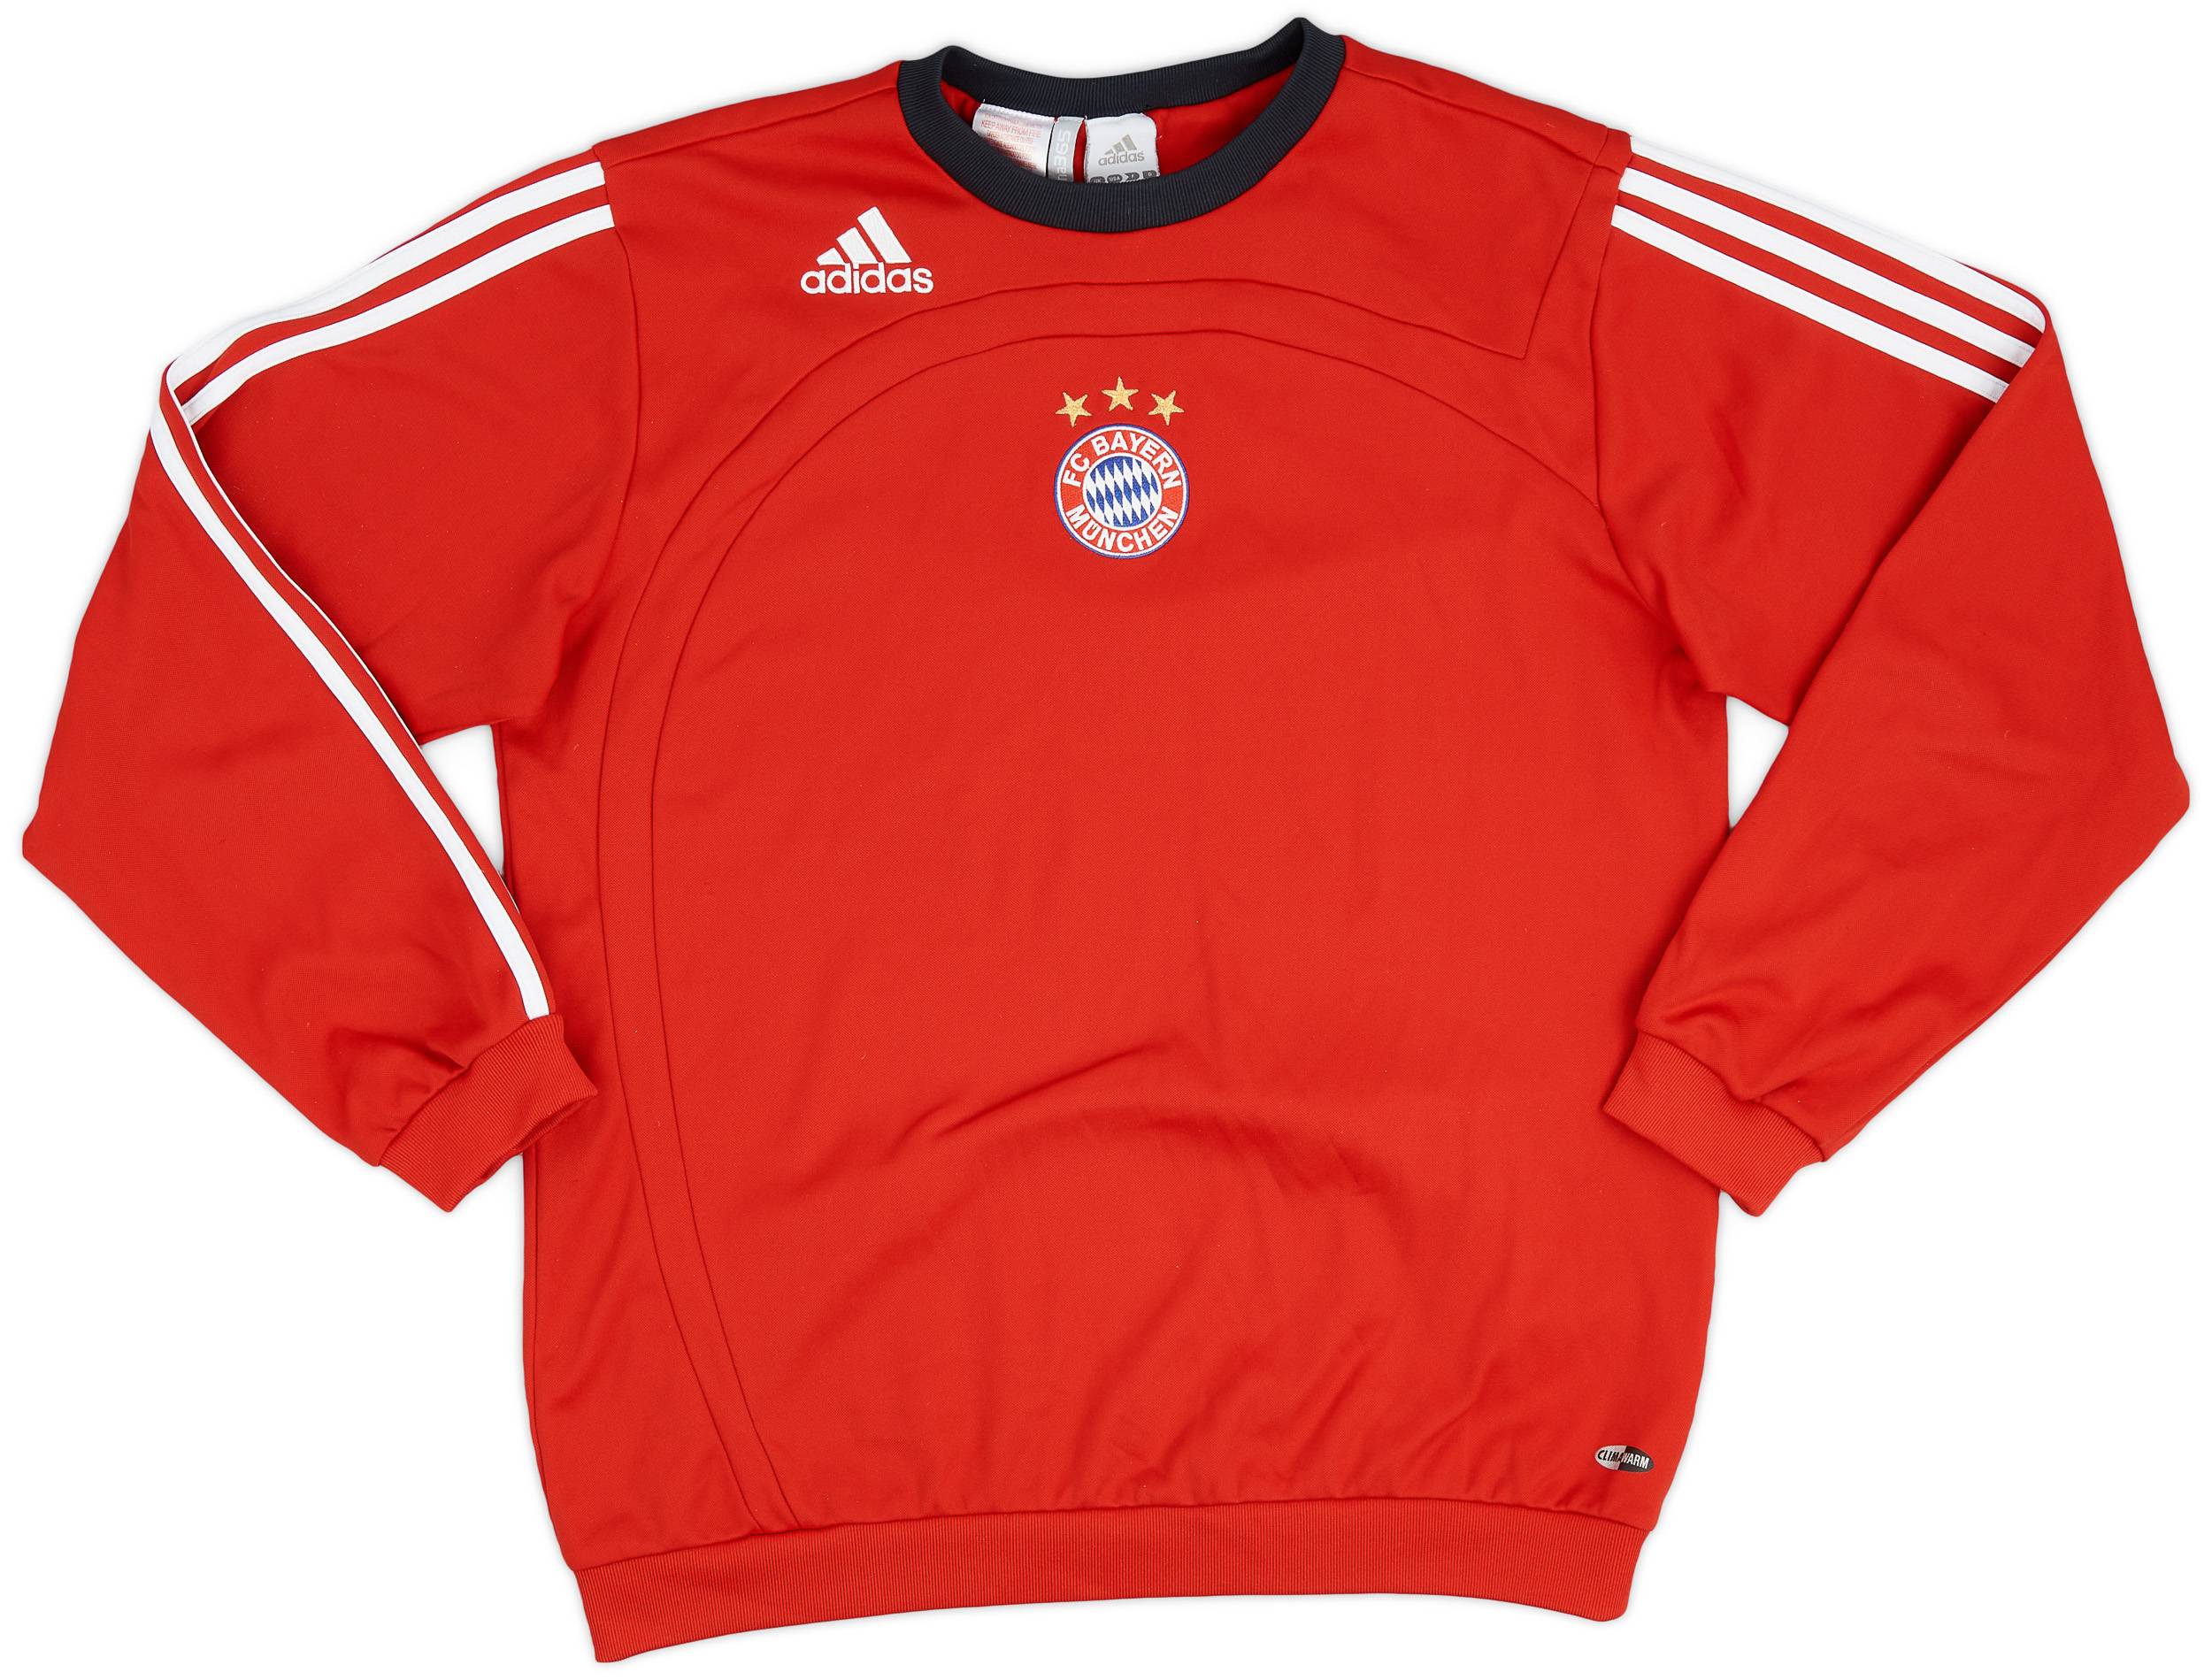 2007-08 Bayern Munich adidas Sweat Top - 8/10 - (XL.Boys)